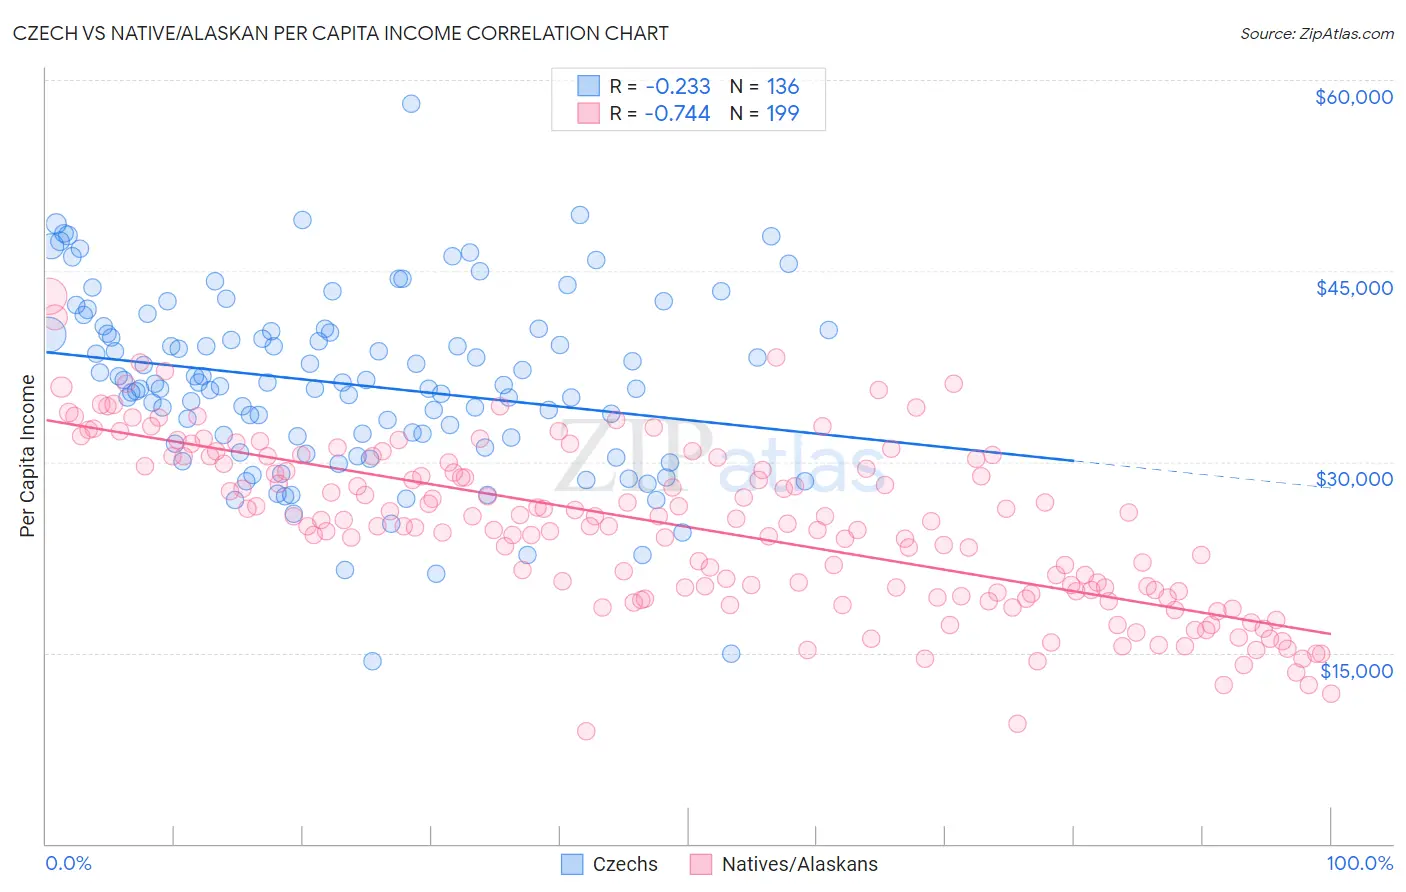 Czech vs Native/Alaskan Per Capita Income